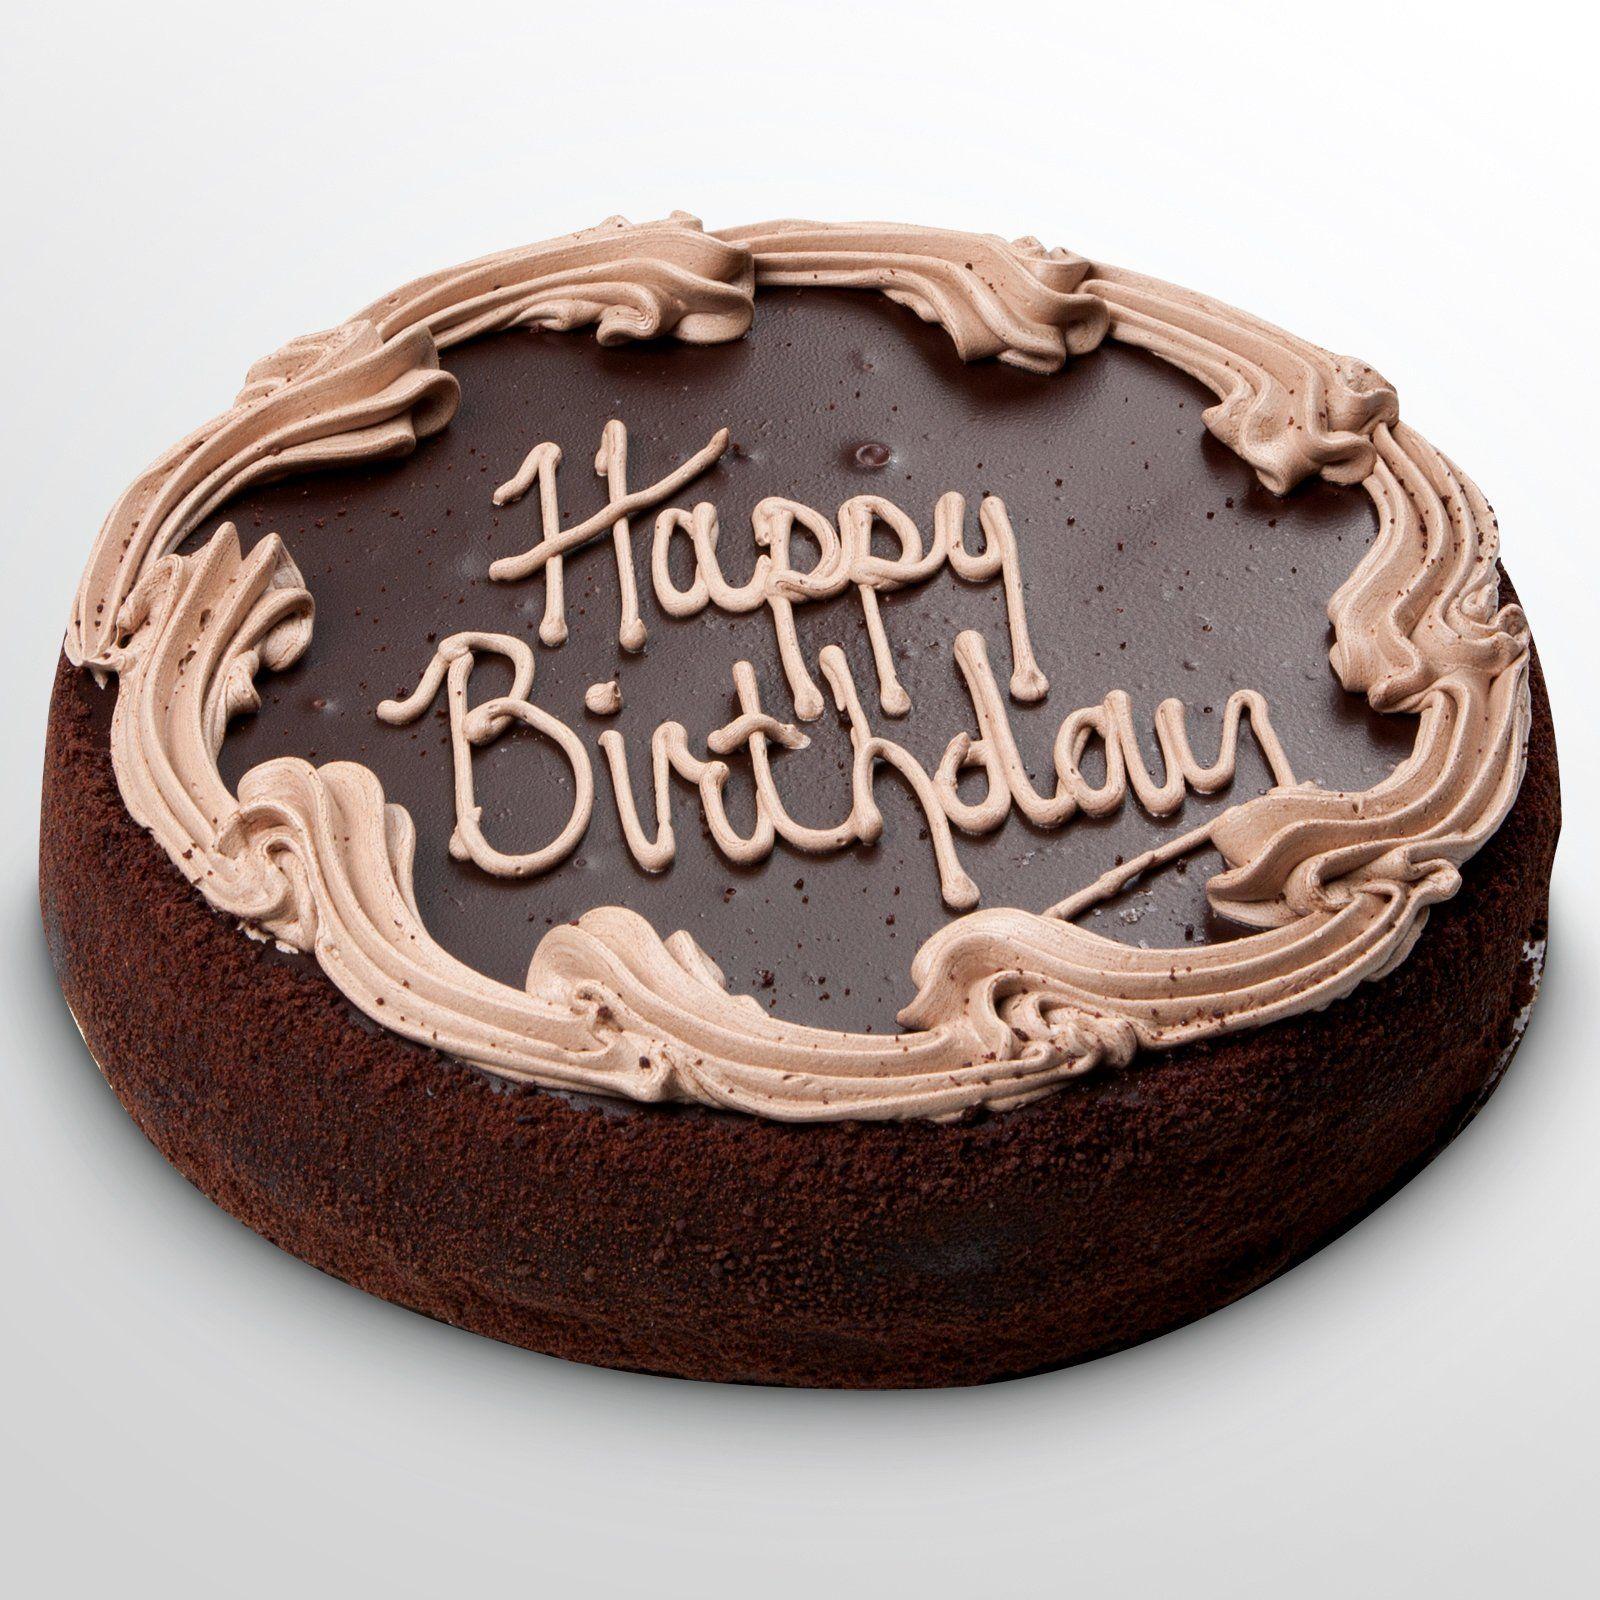 Chocolate Happy Birthday Cake Image, Picture and Photo. Happy